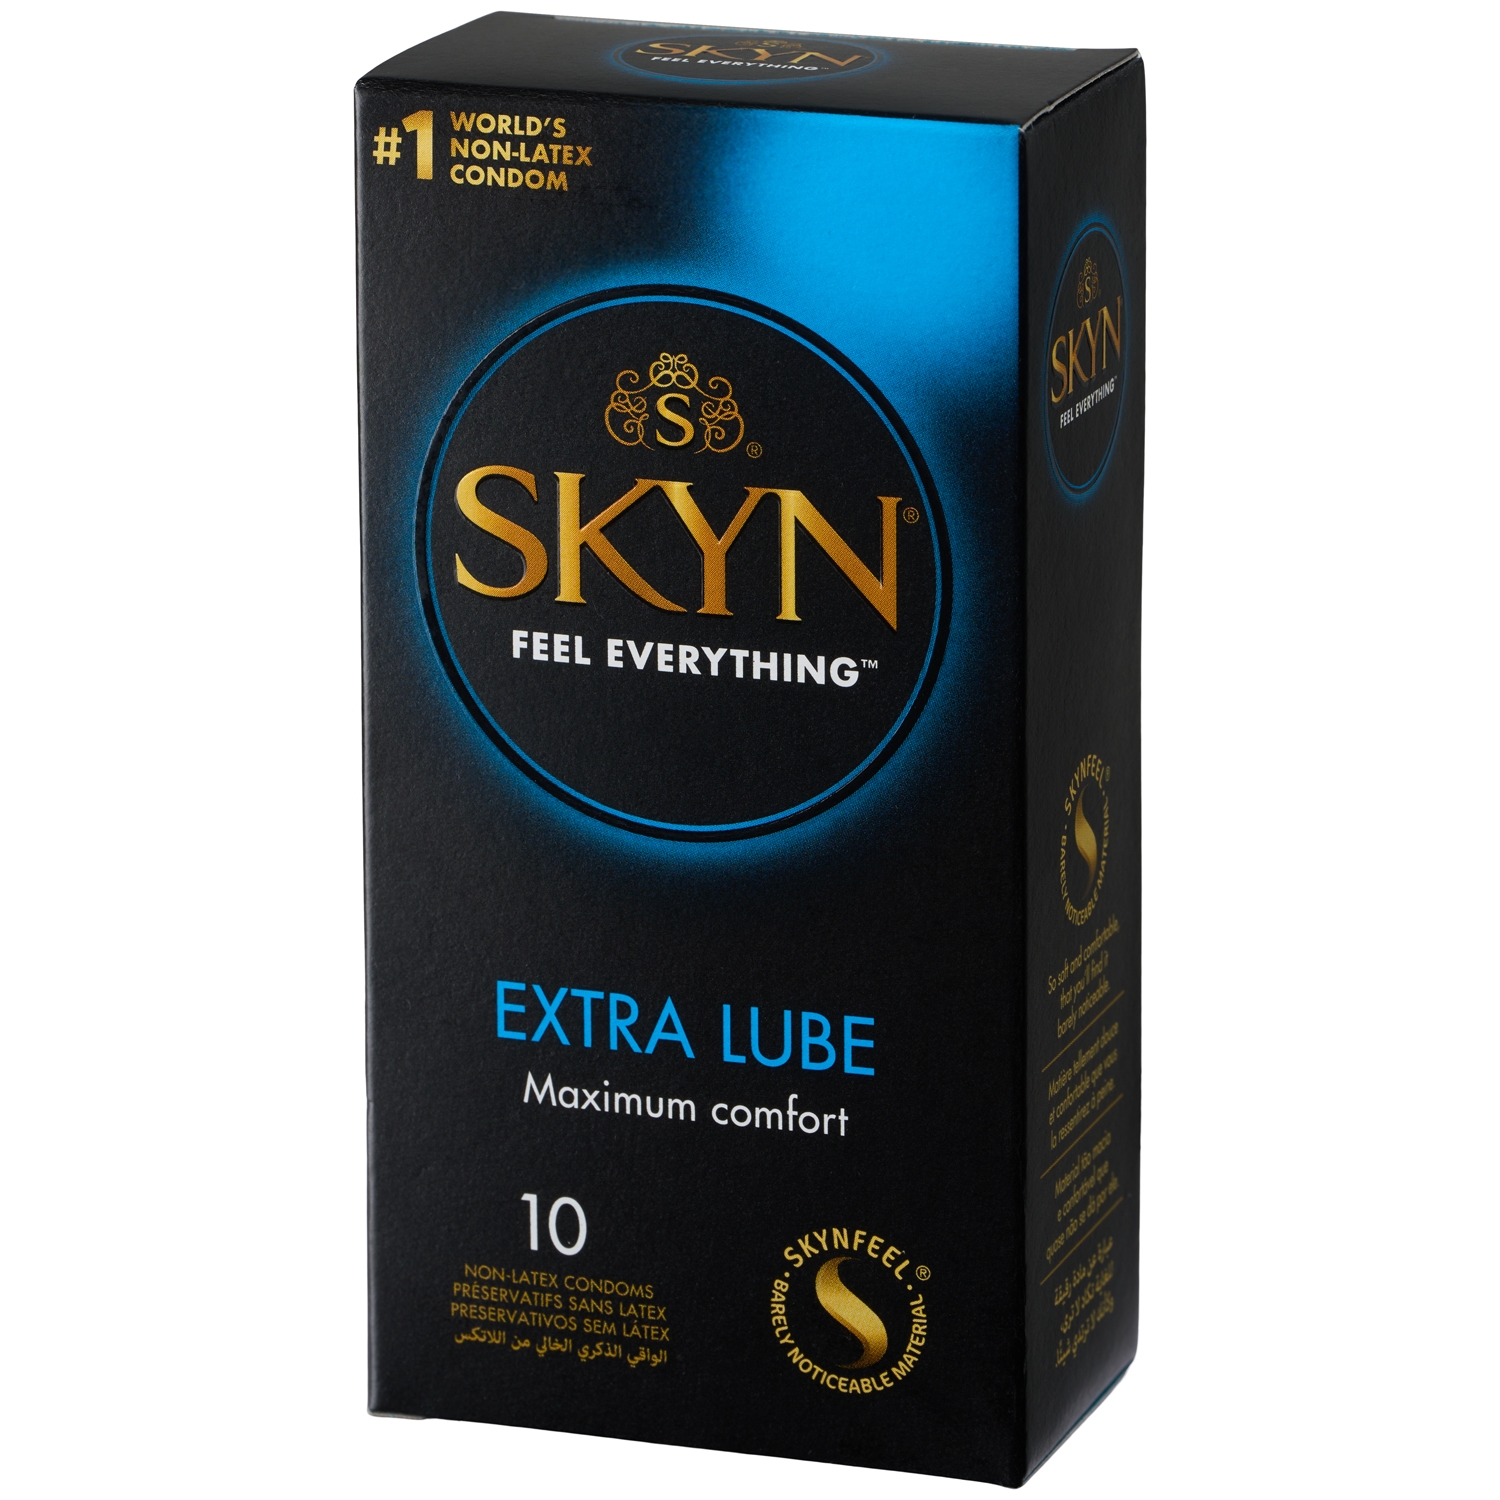 Skyn Extra Lube Latexfri Kondomer 10 stk - Klar thumbnail